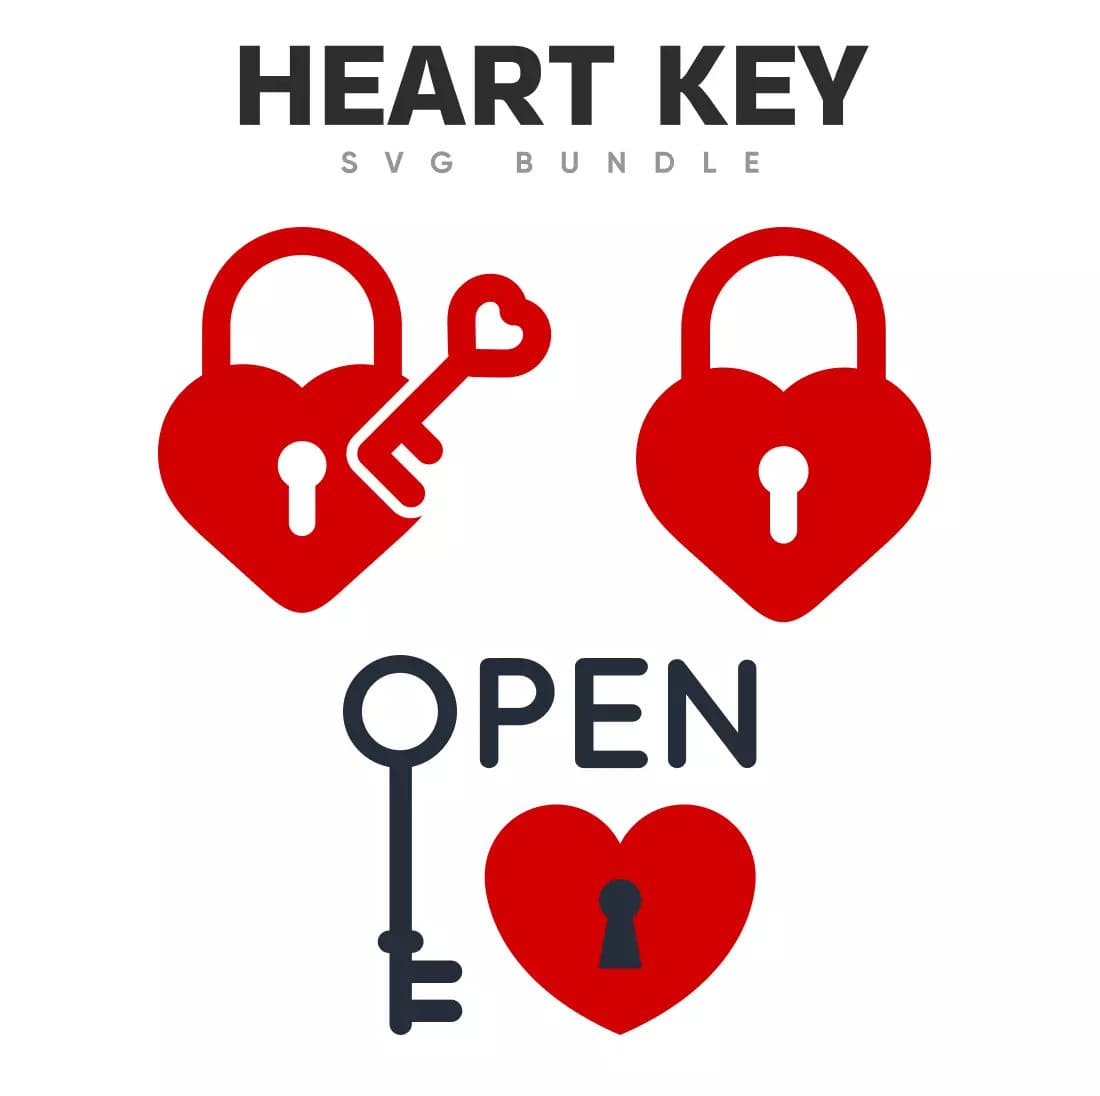 Heart Key SVG Bundle Preview.